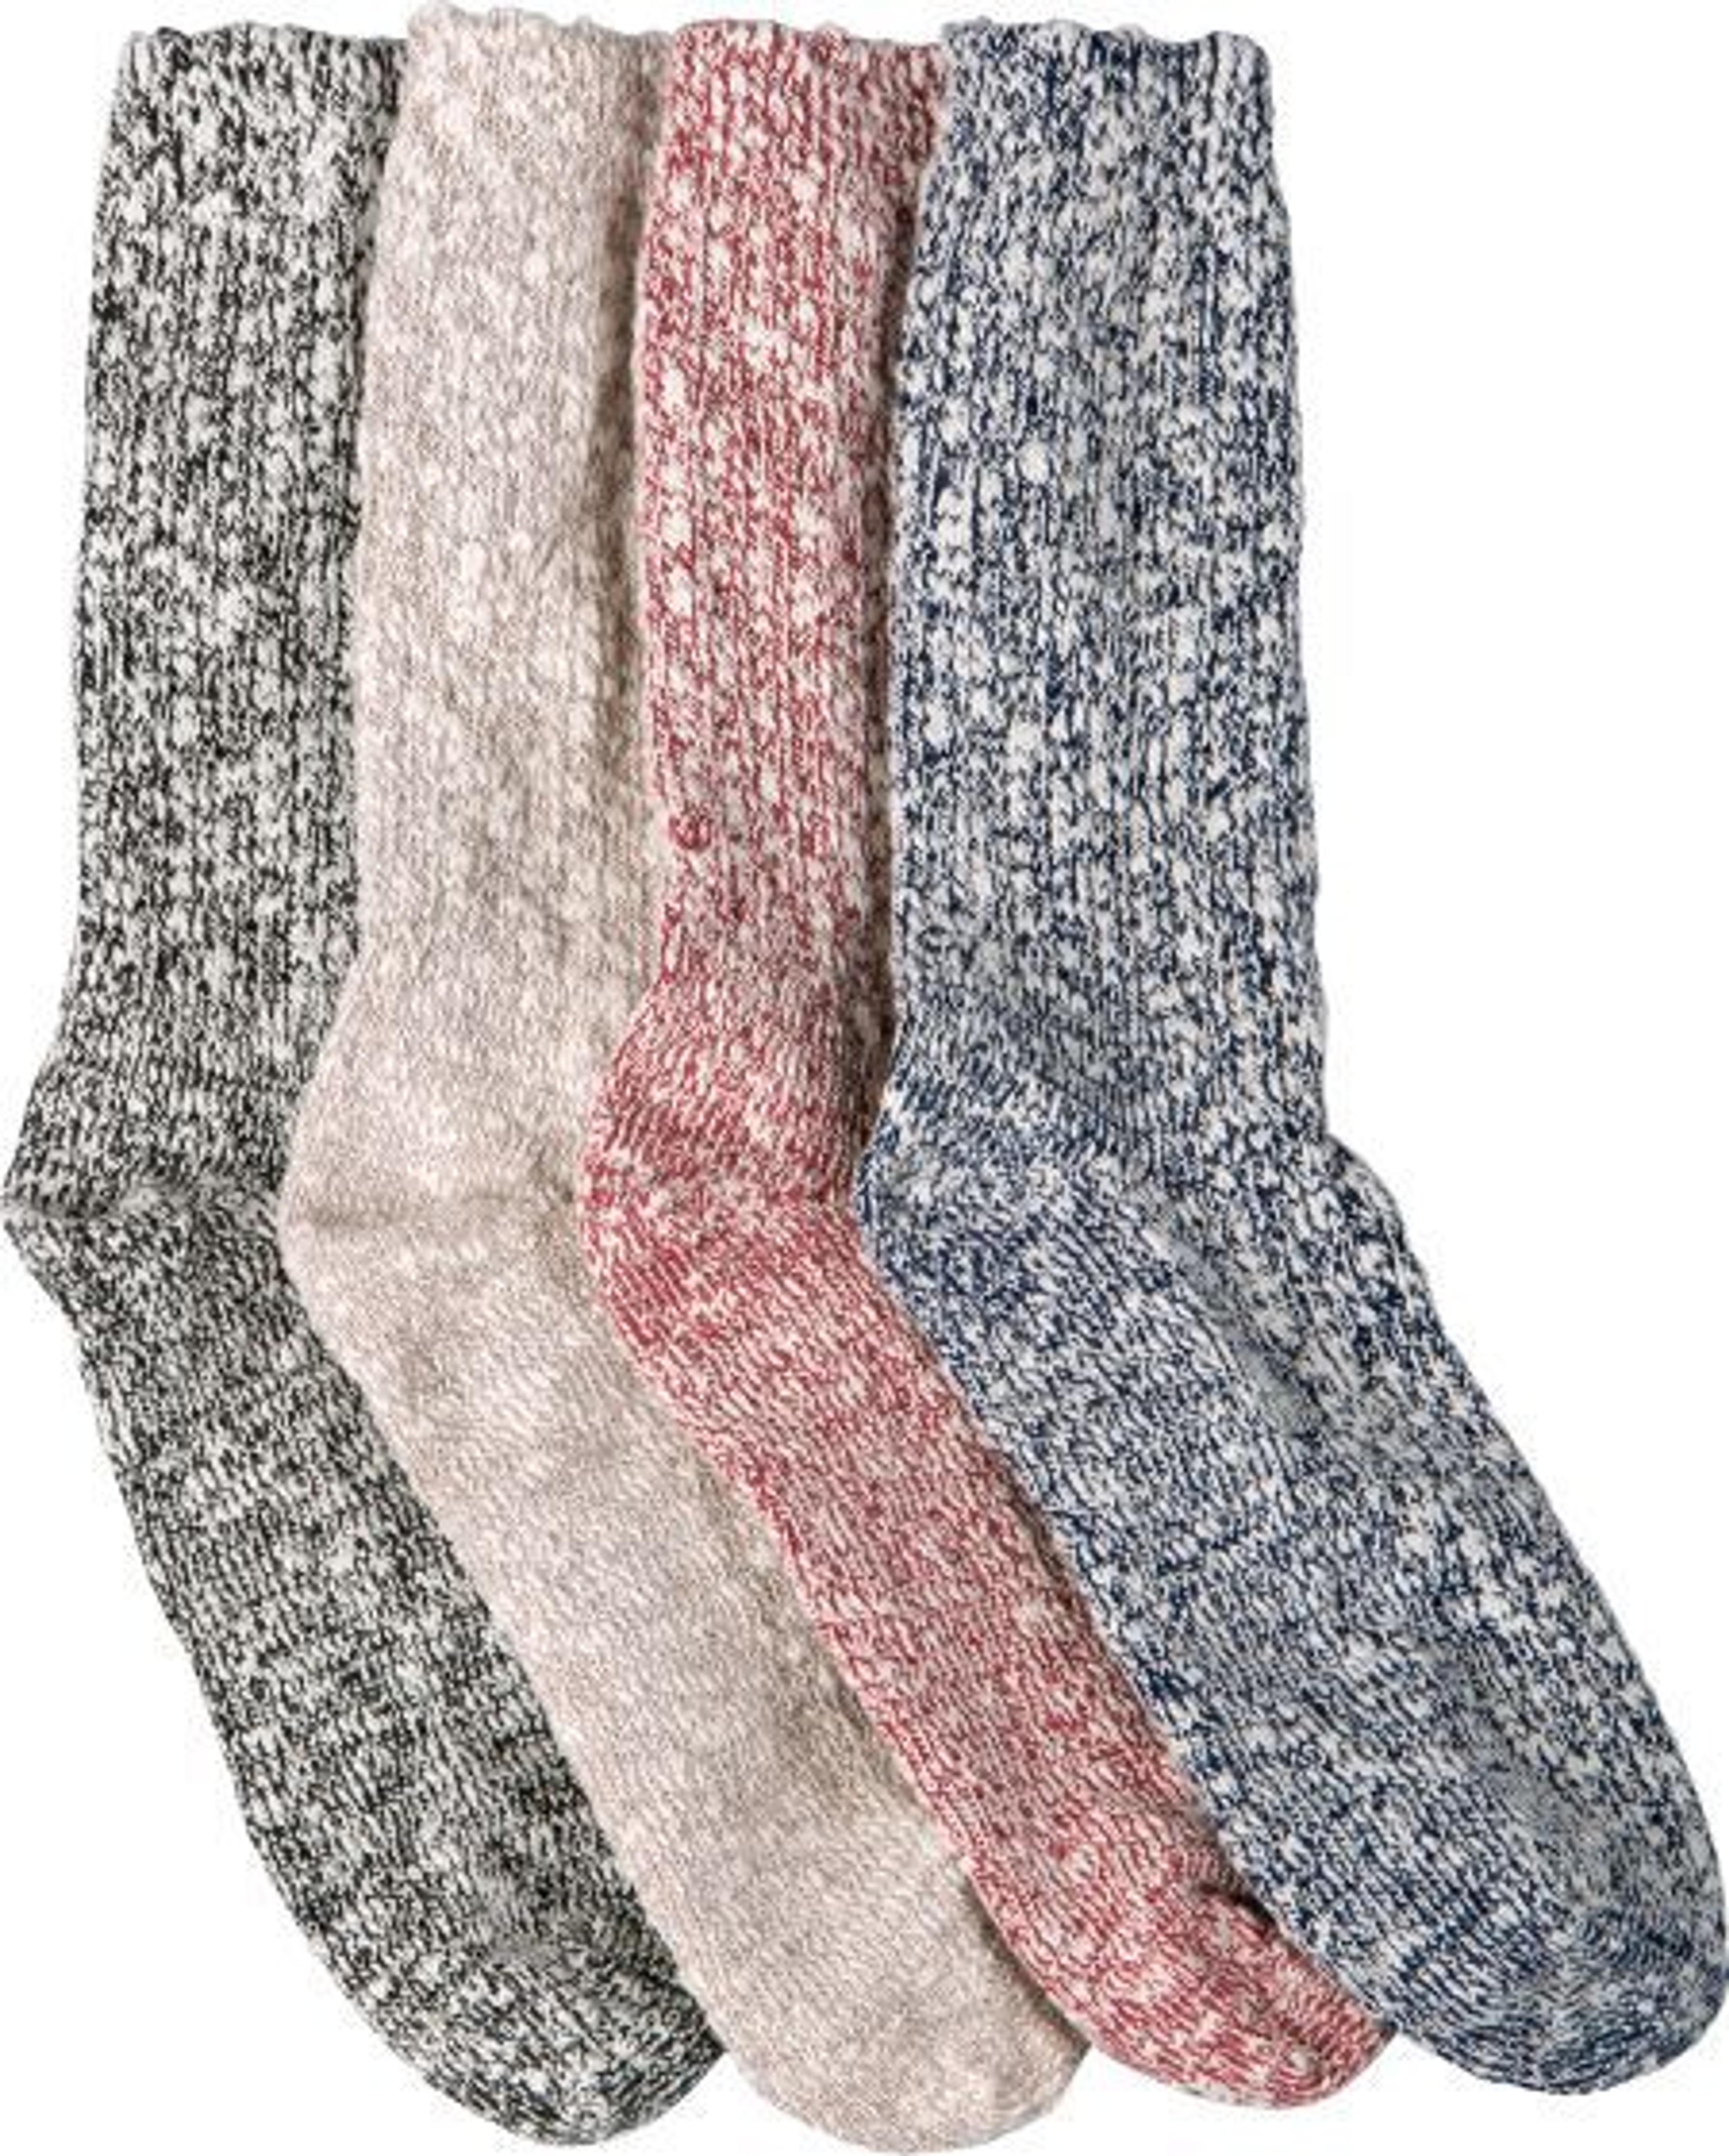 Wigwam Cotton-Blend Ragg Socks, 2 Pairs